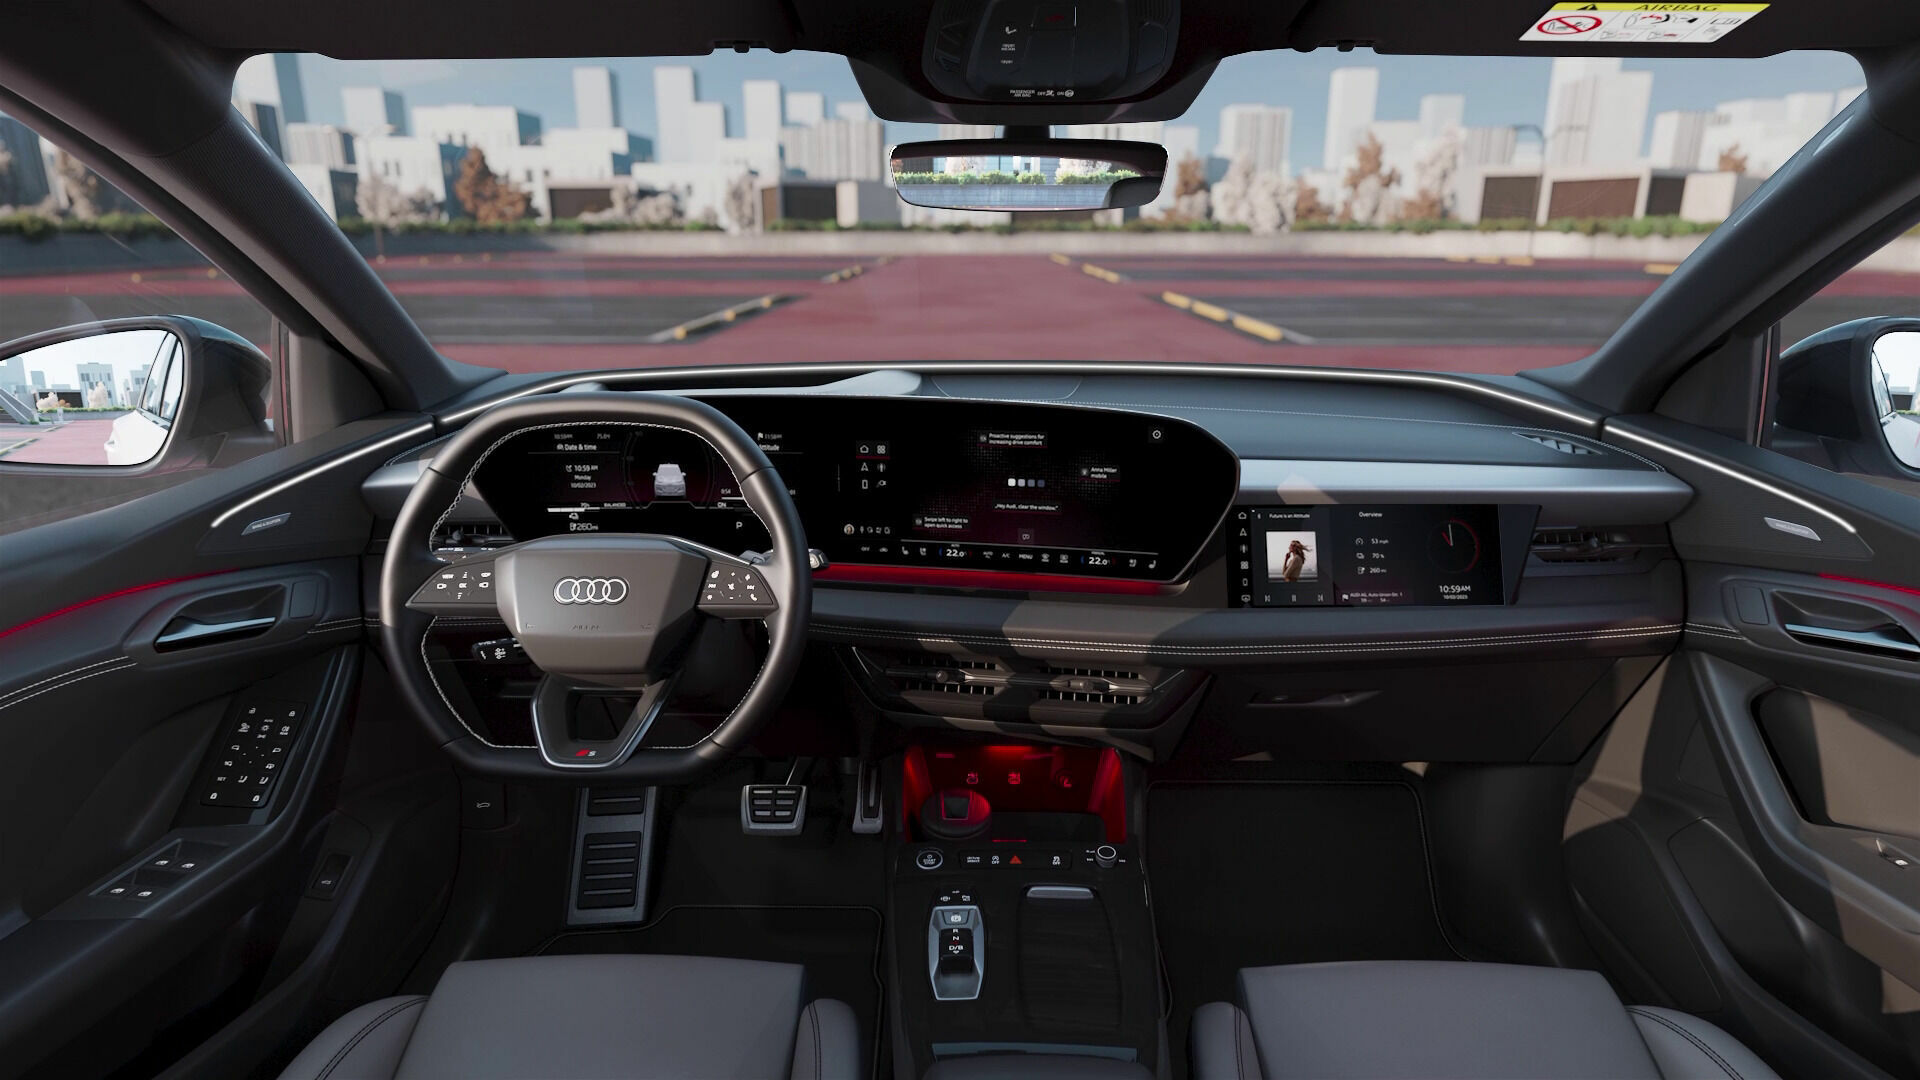 FIS/ Multifunktionslenkrad - Audi Technology Portal